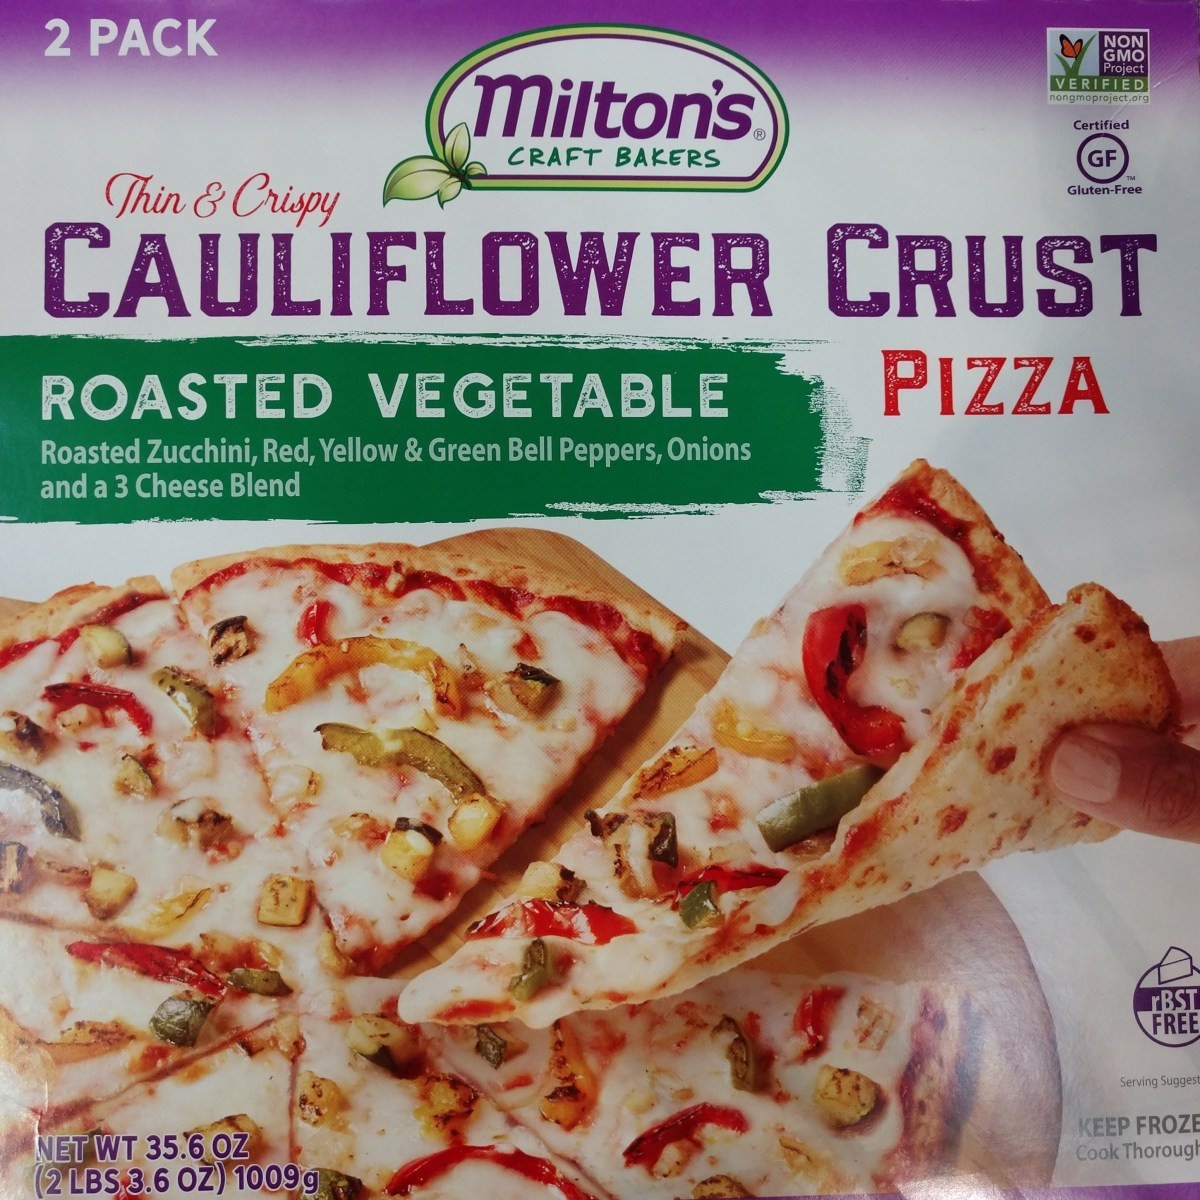 Costco Cauliflower Pizza
 Milton’s Craft Bakers Cauliflower Pizza – Gluten